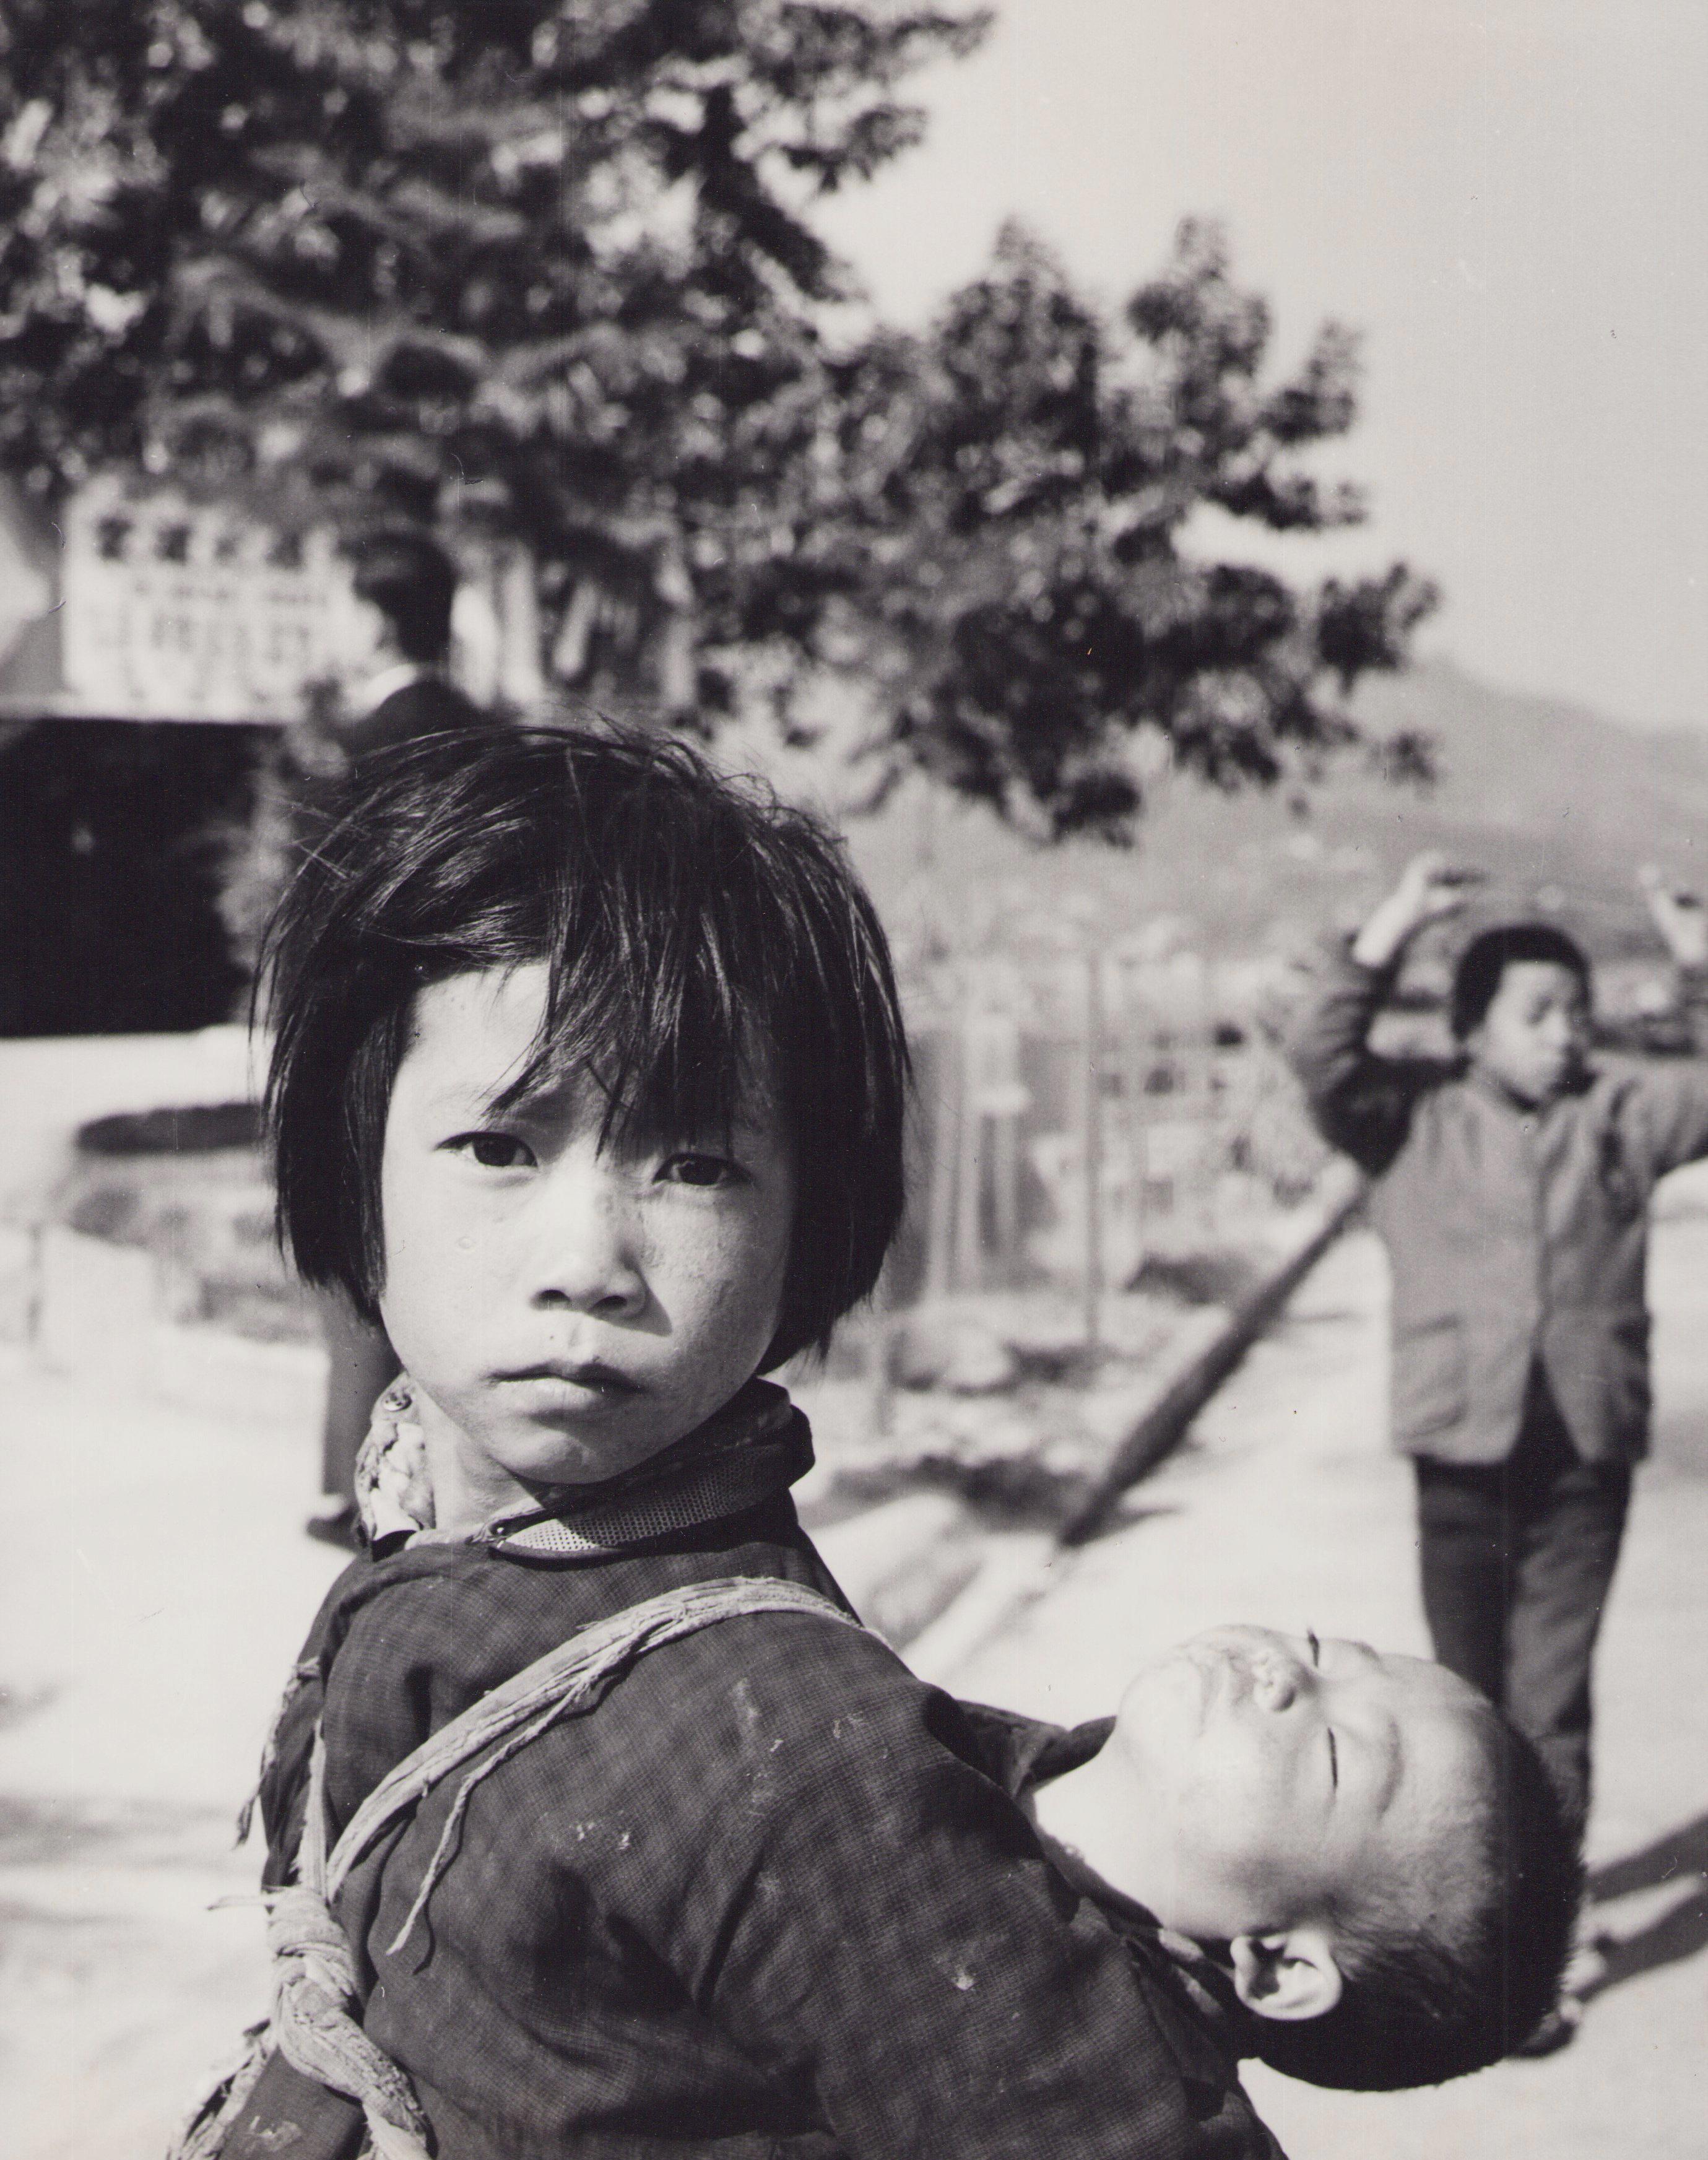 Hanna Seidel Portrait Photograph - Hong Kong, Children, Street, Black and White Photography, 1960s, 30 x 23, 9 cm